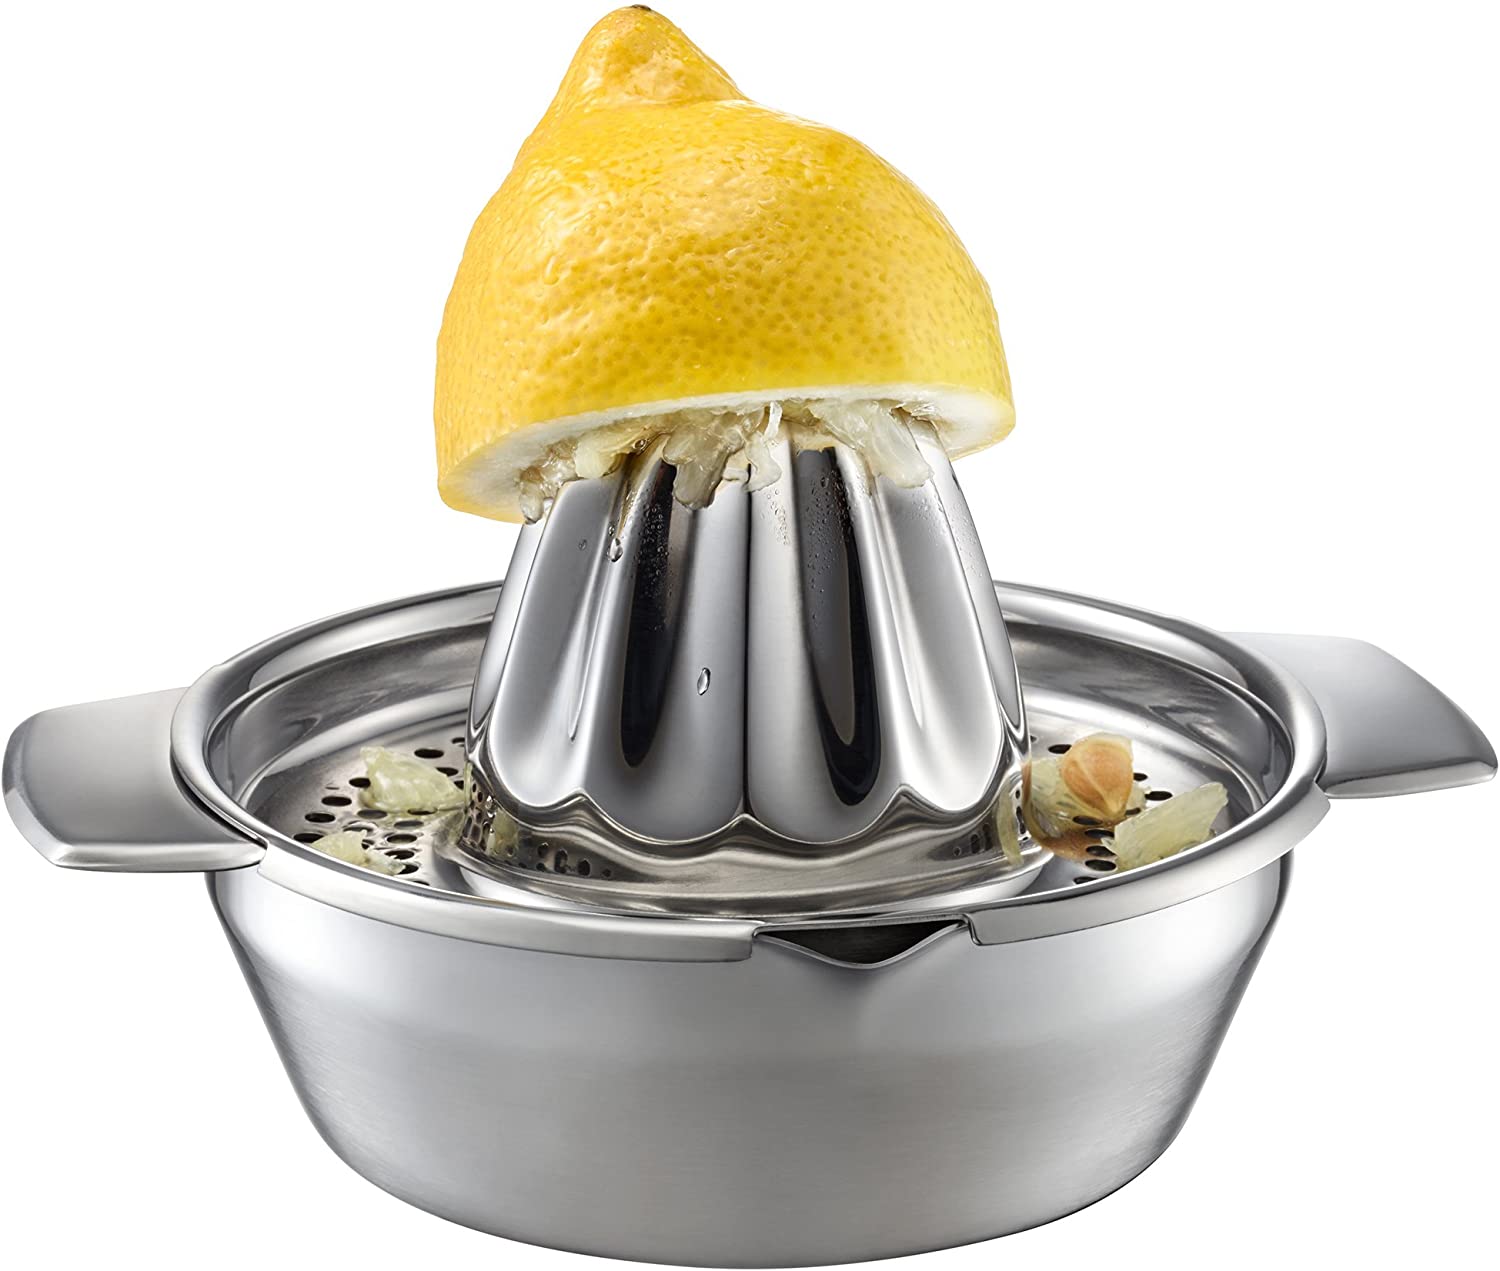 Gefu Citrus Press Lemon, for Juices, Accessories, 18/10 Stainless Steel, 13970